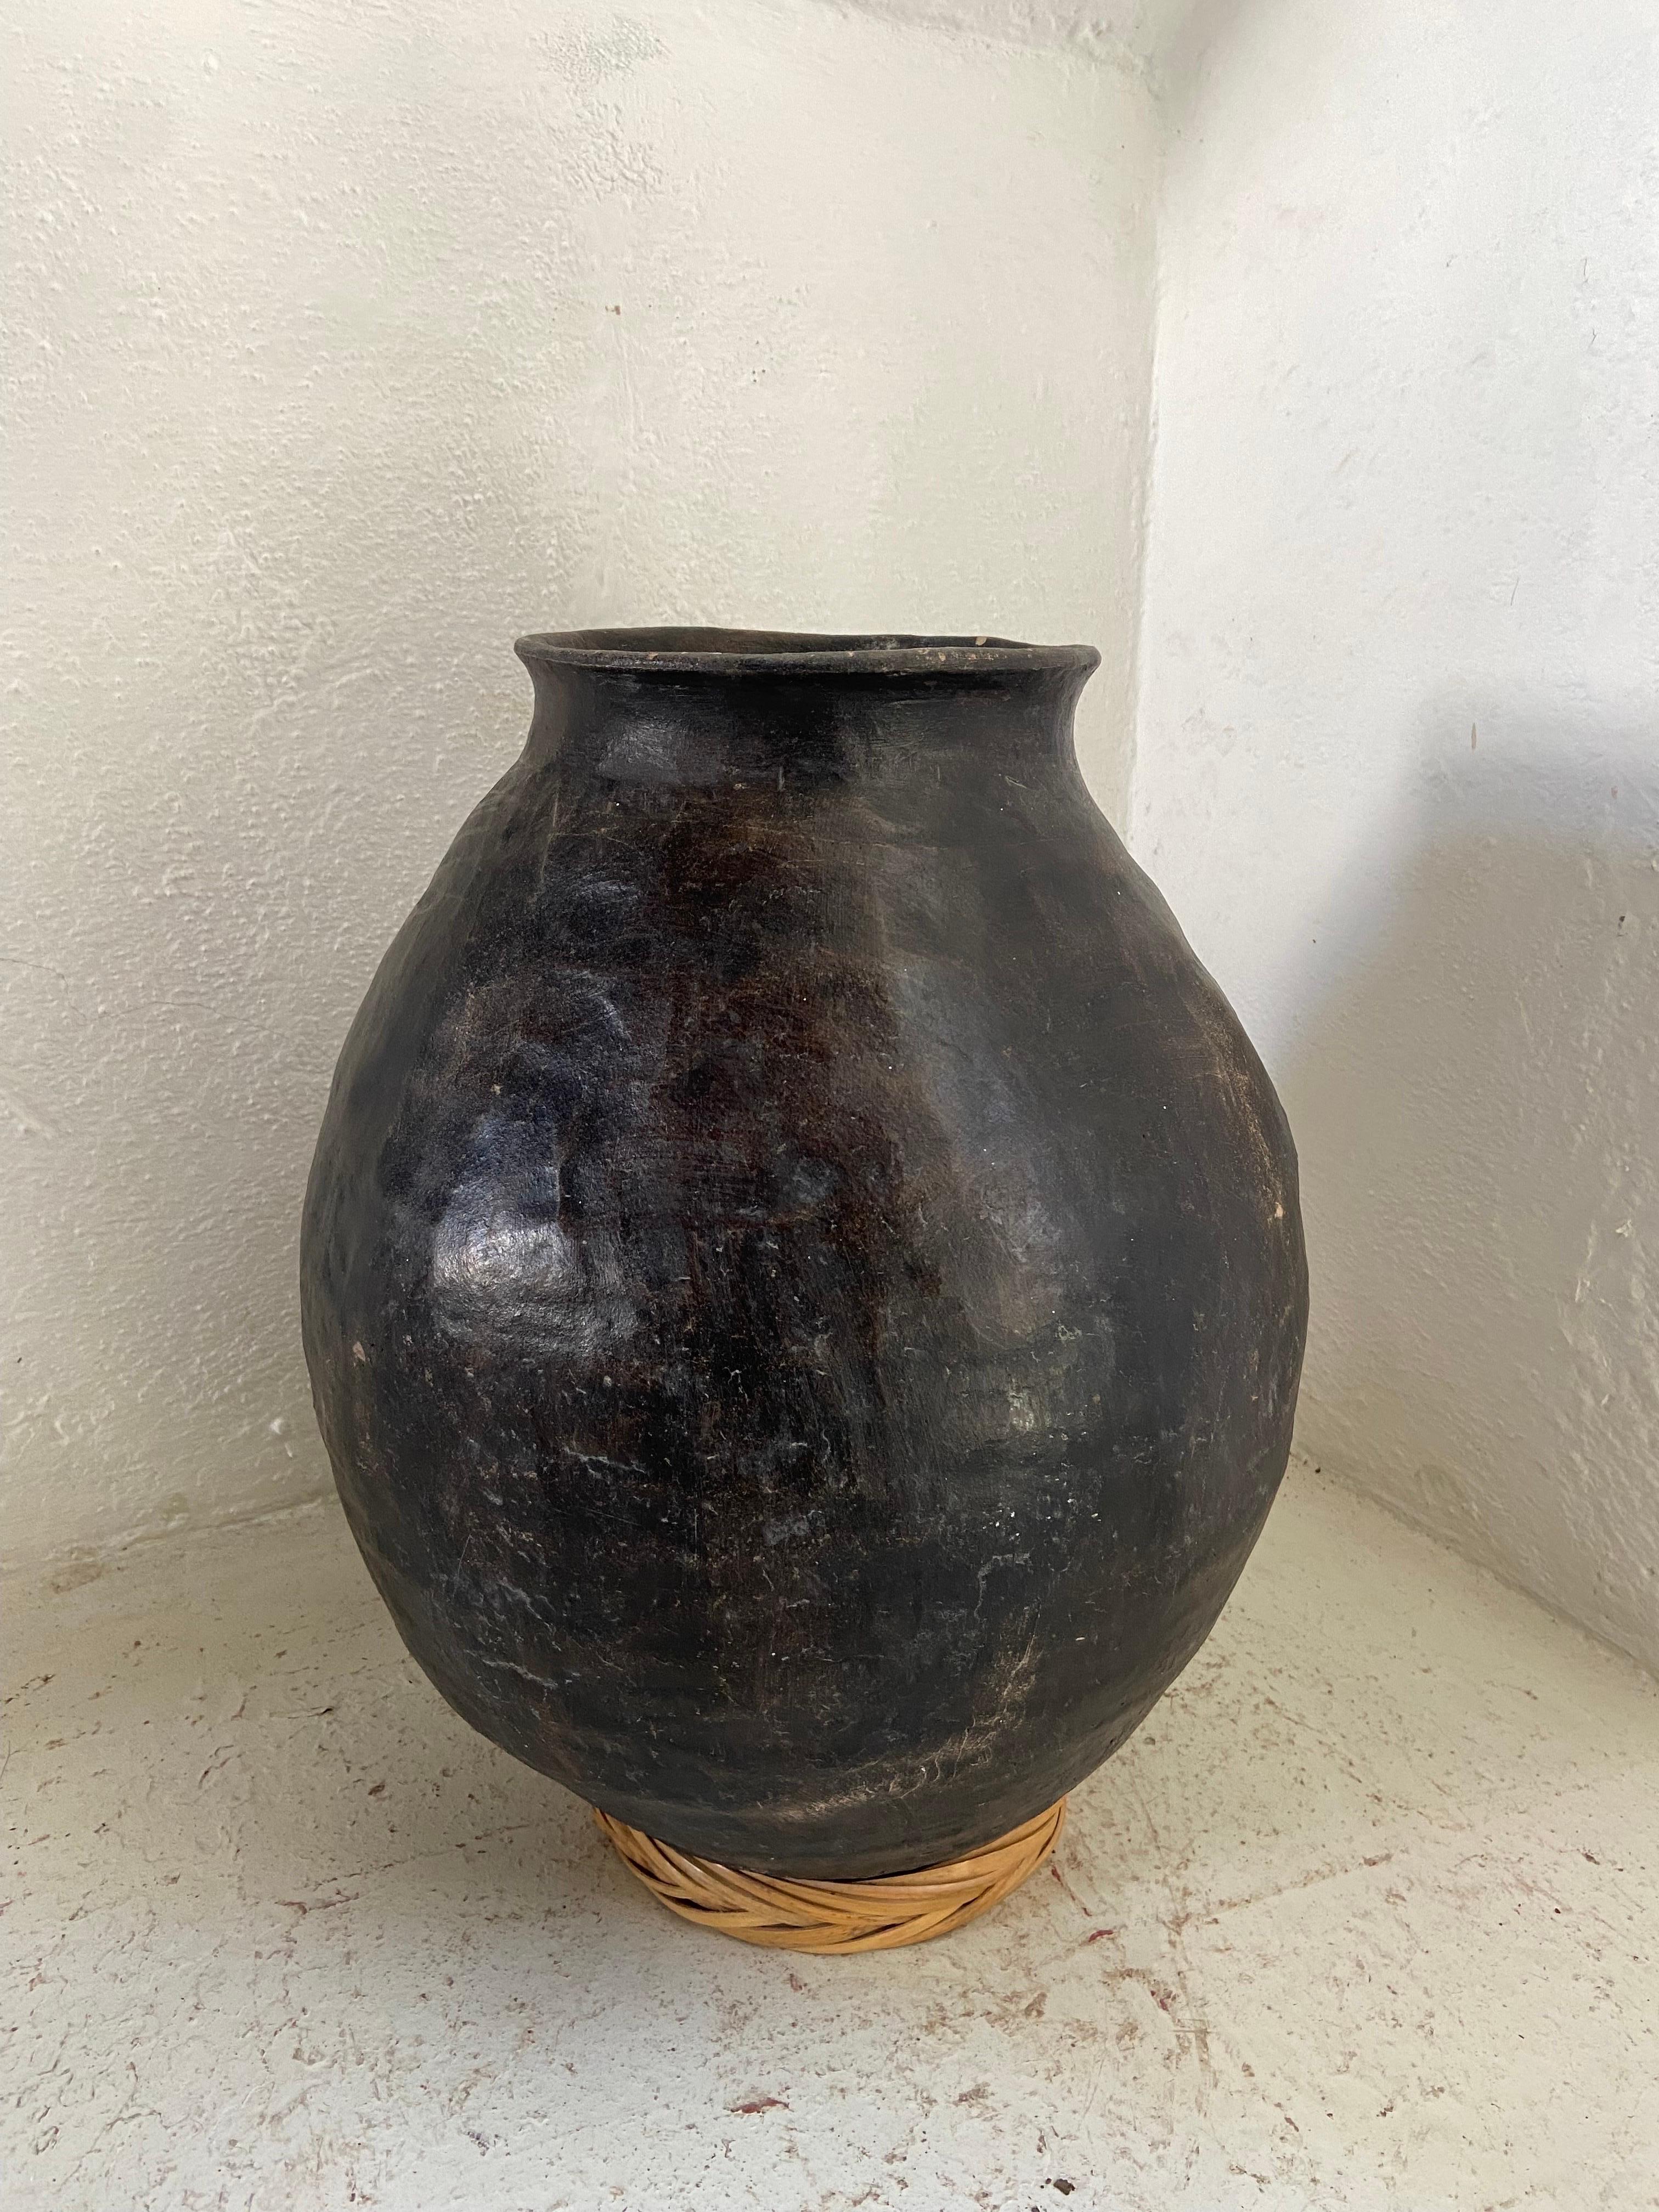 Primitive Tarahumara Ceramic Water Vessel from Mexico, circa Early 1900s